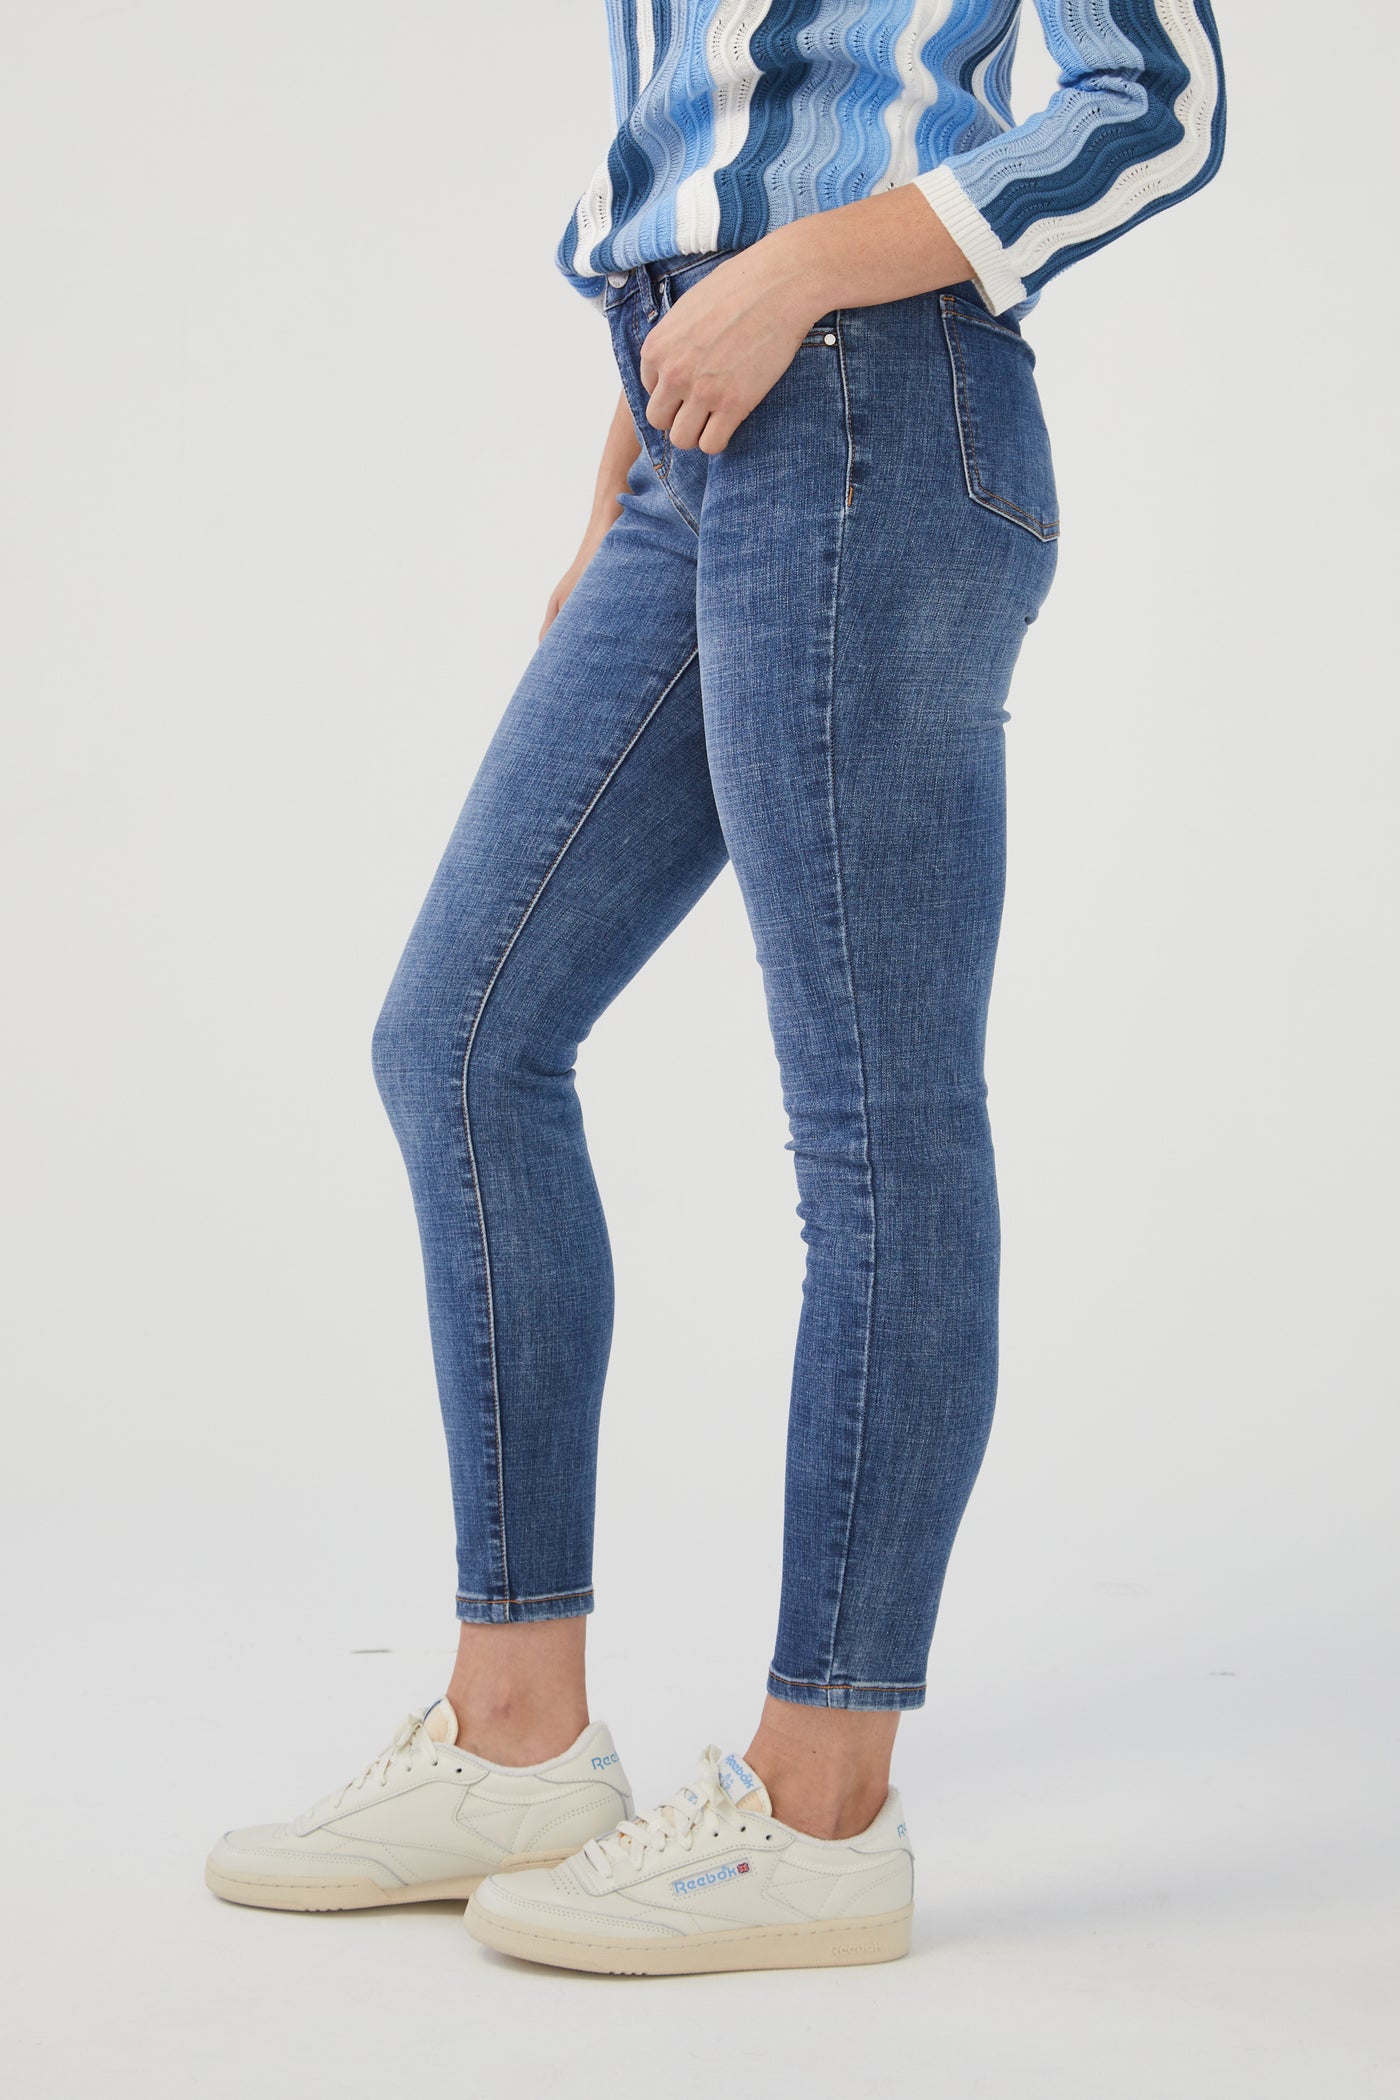 French Dressing Jeans Olivia Slim Ankle, Crosshatch Denim, Mid Rise 